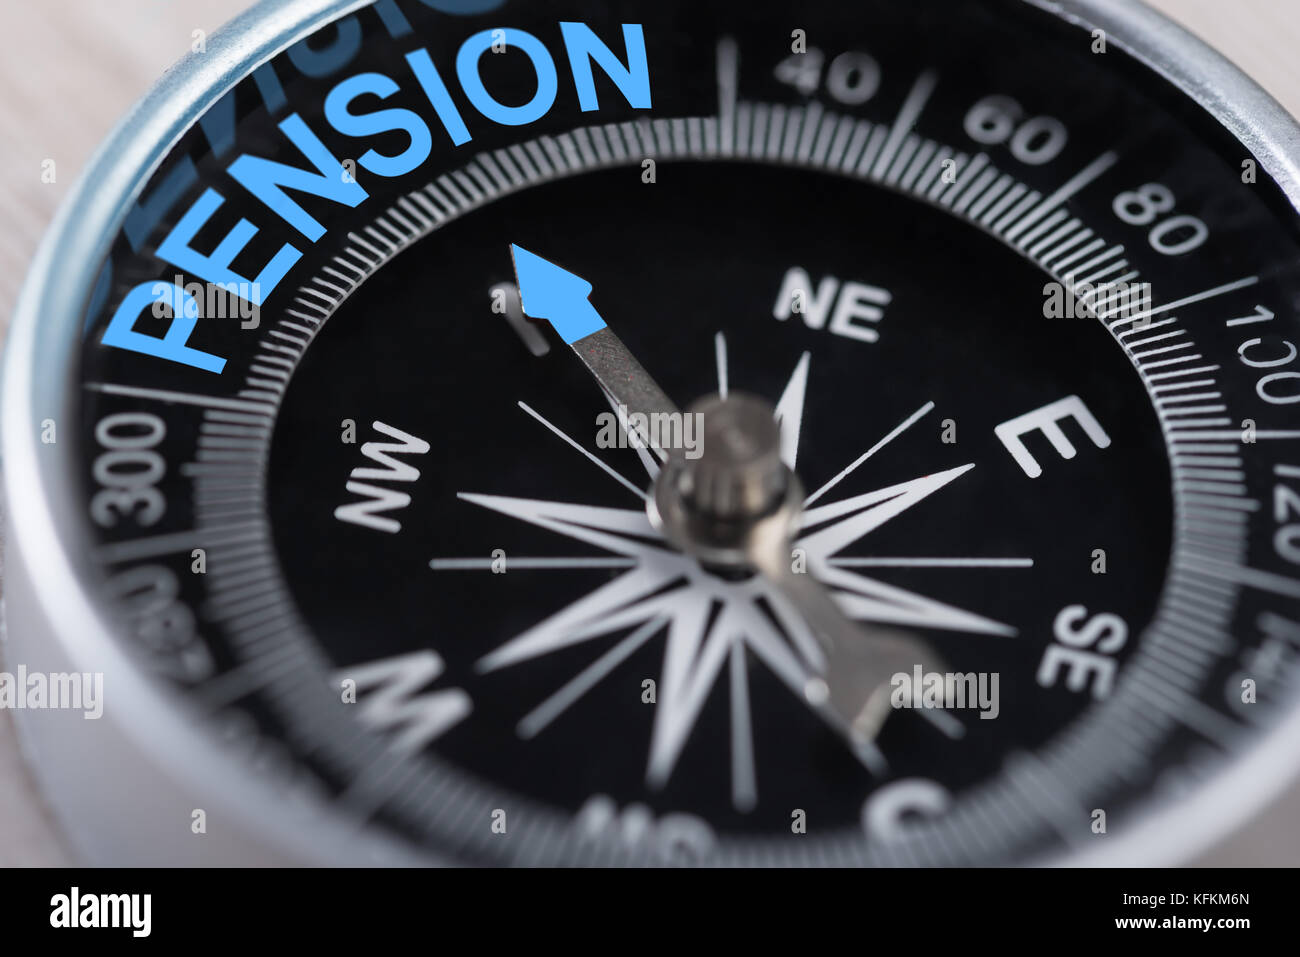 Closeup of compass indicating Pension direction. Concept Shot Stock Photo